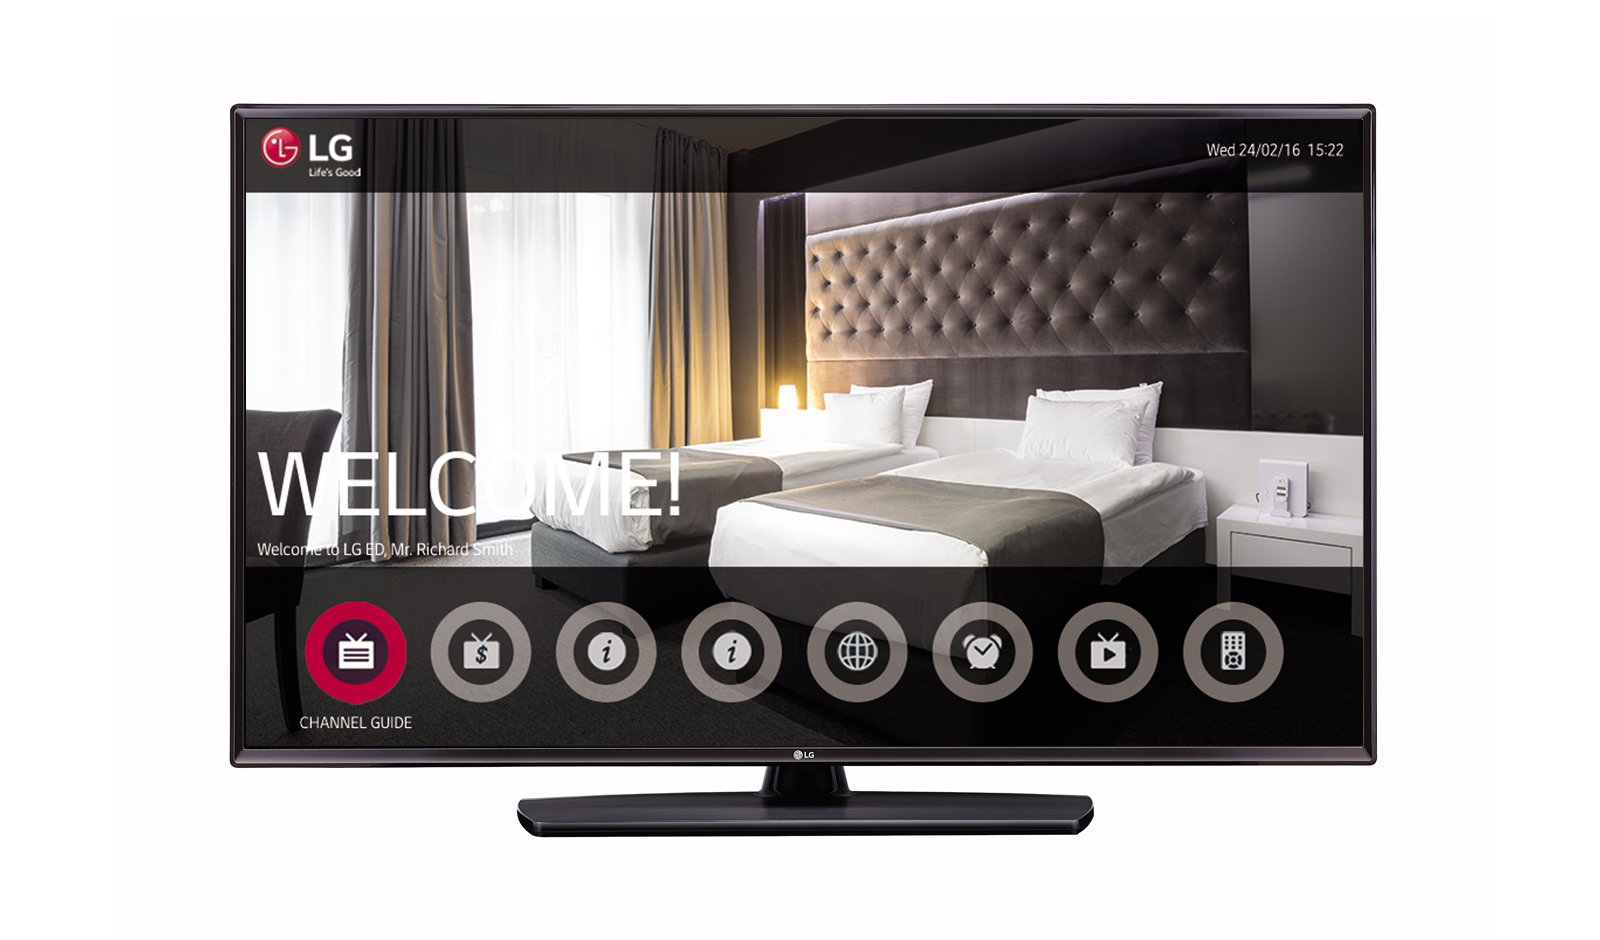 LG 49LV341H 49 Inch FHD Hospitality TV